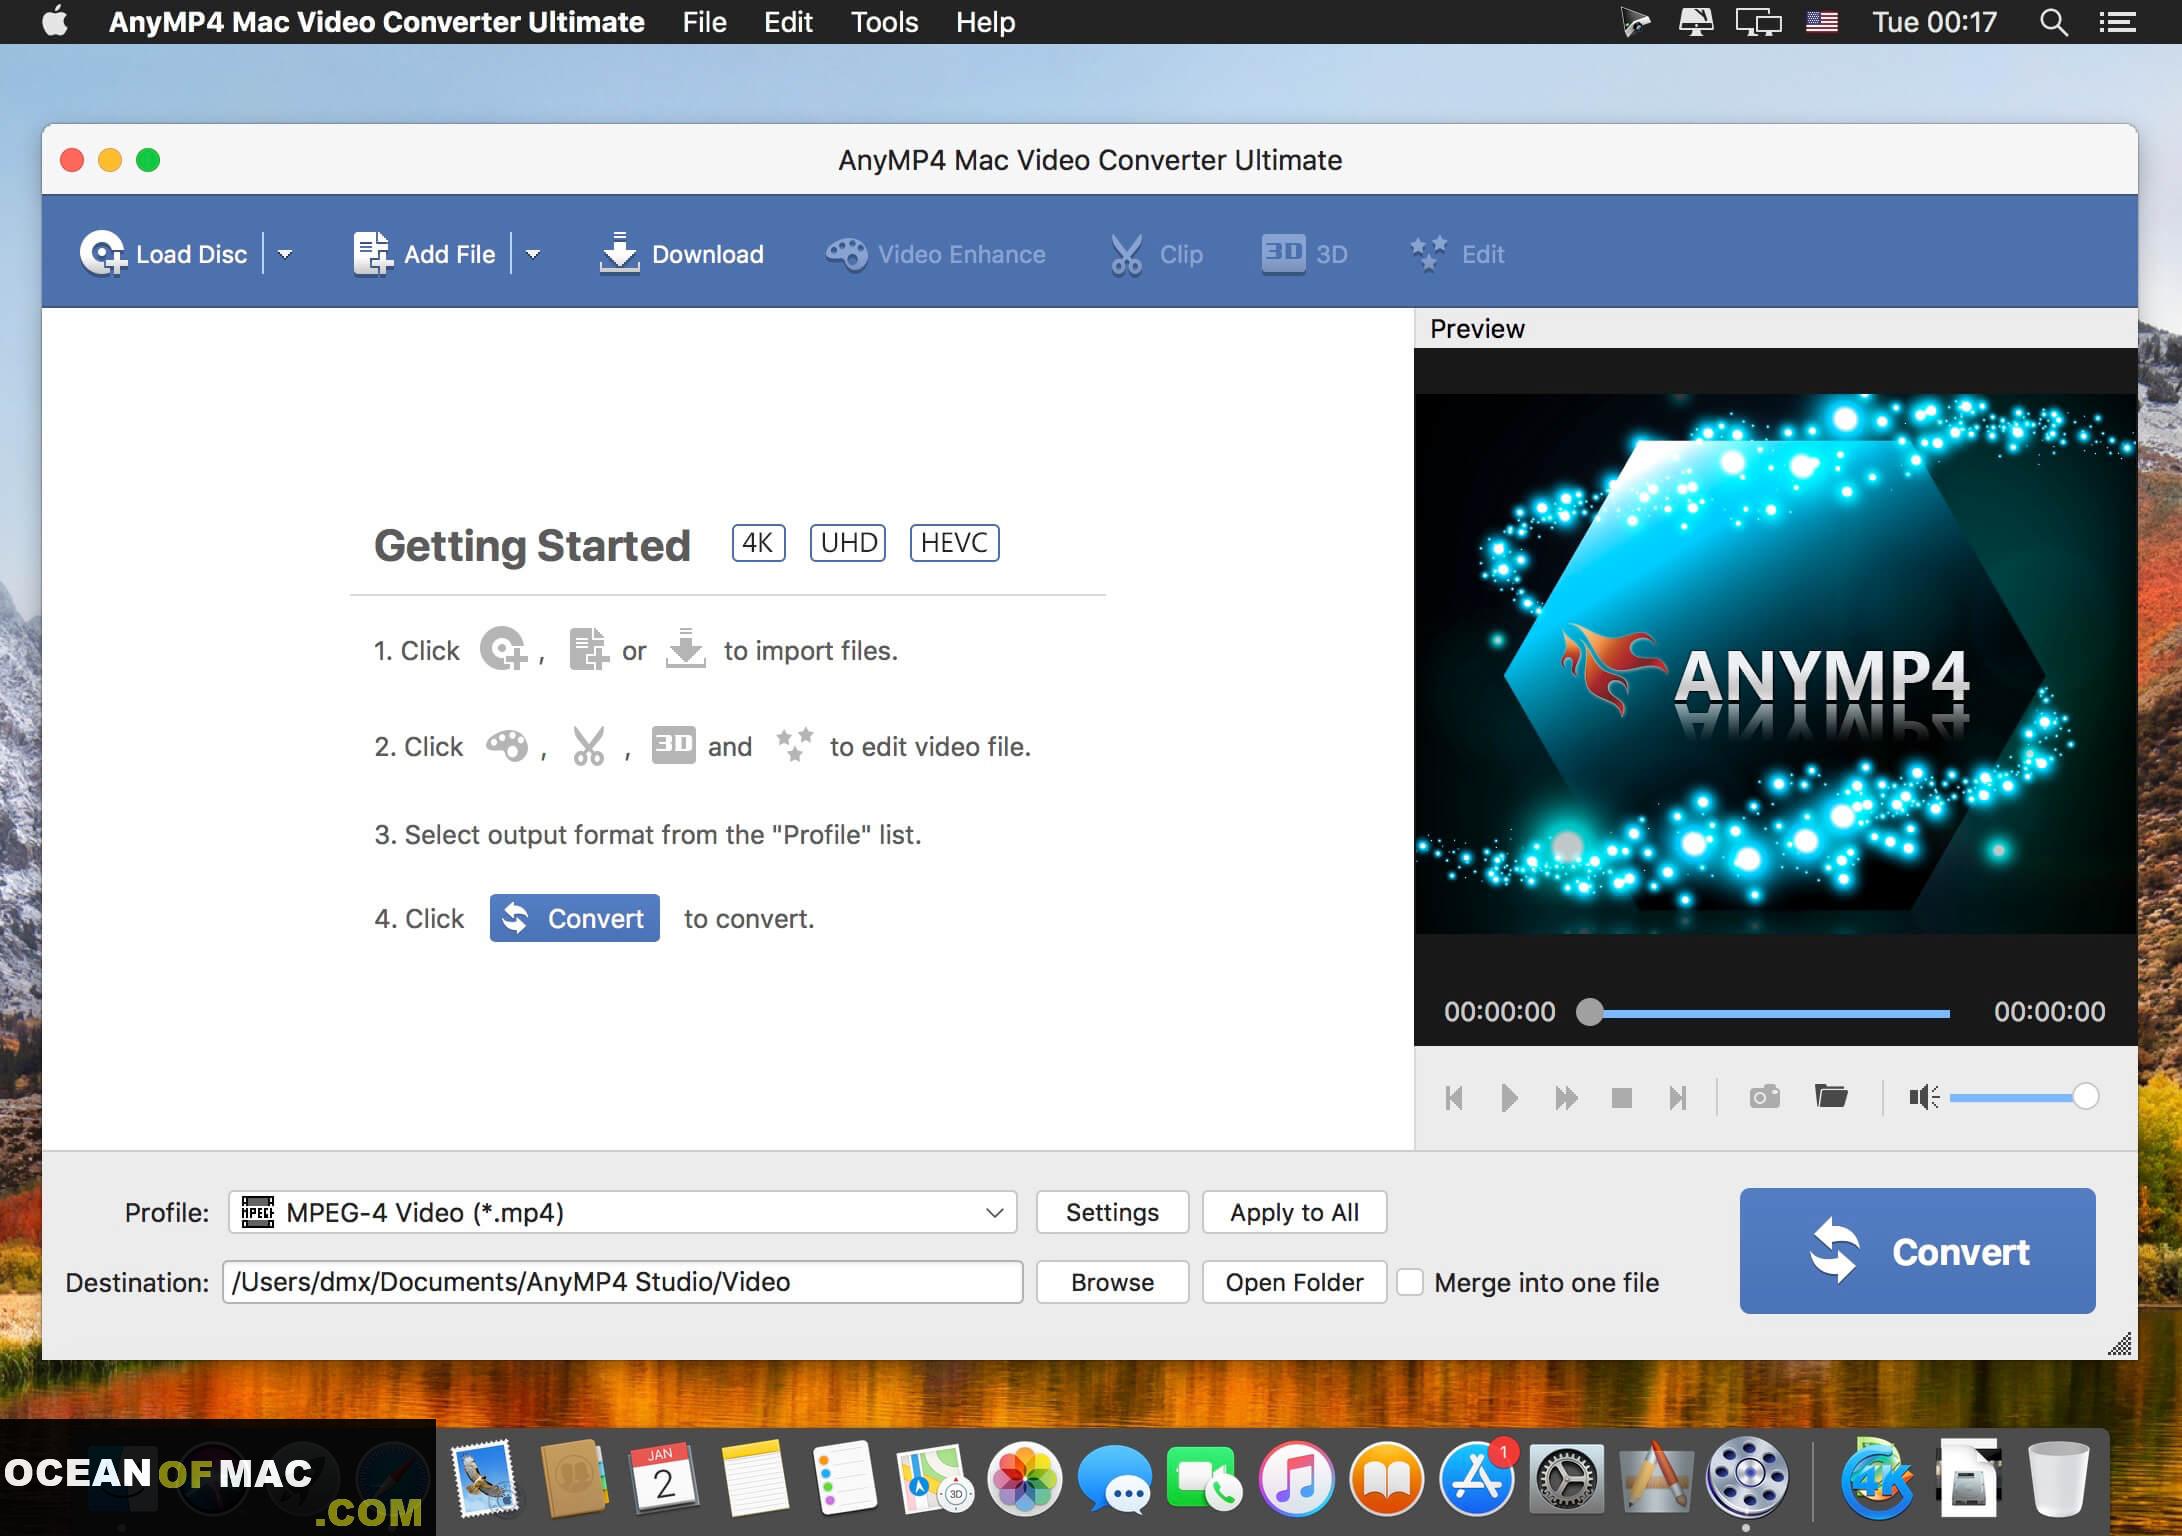 AnyMP4 Mac Video Converter Ultimate 8.2.6 for Mac Dmg Free Download